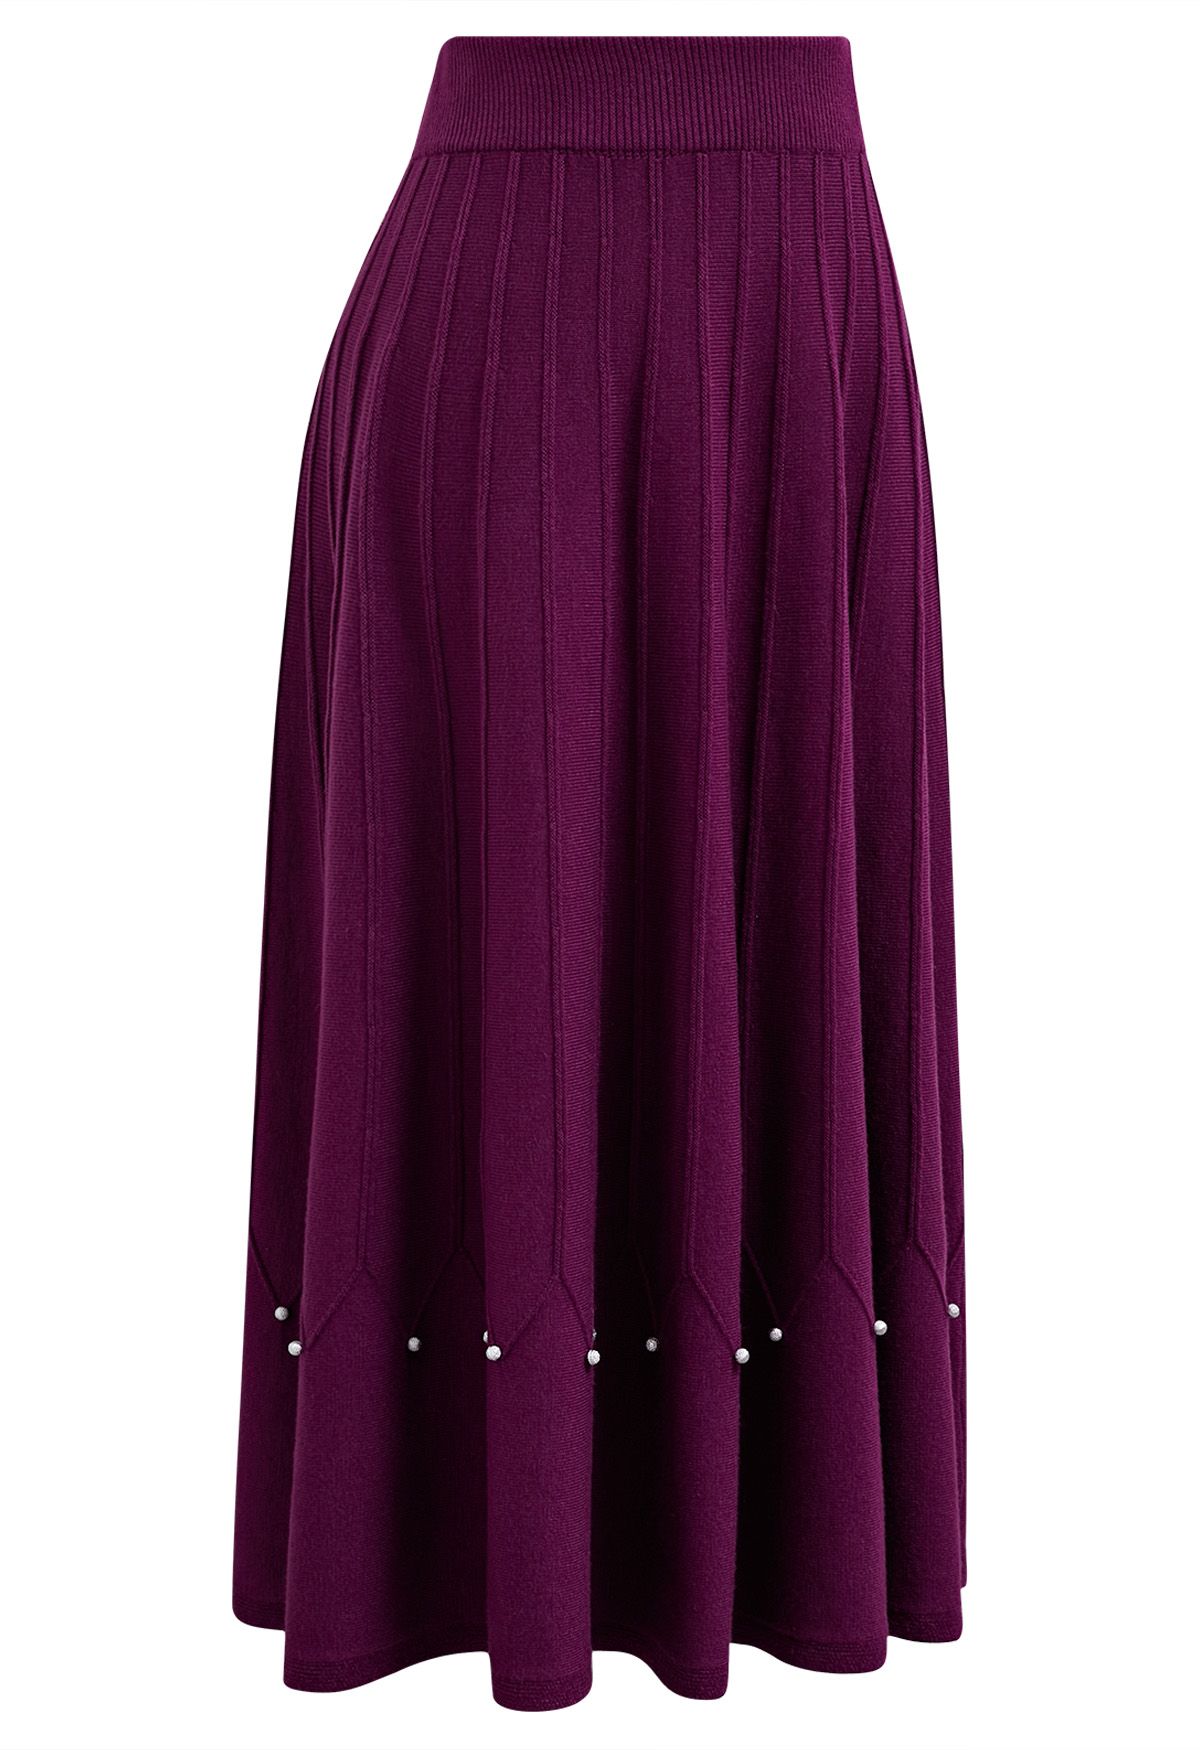 Silver Bead Embellished Seam Knit Midi Skirt in Purple - Retro, Indie ...